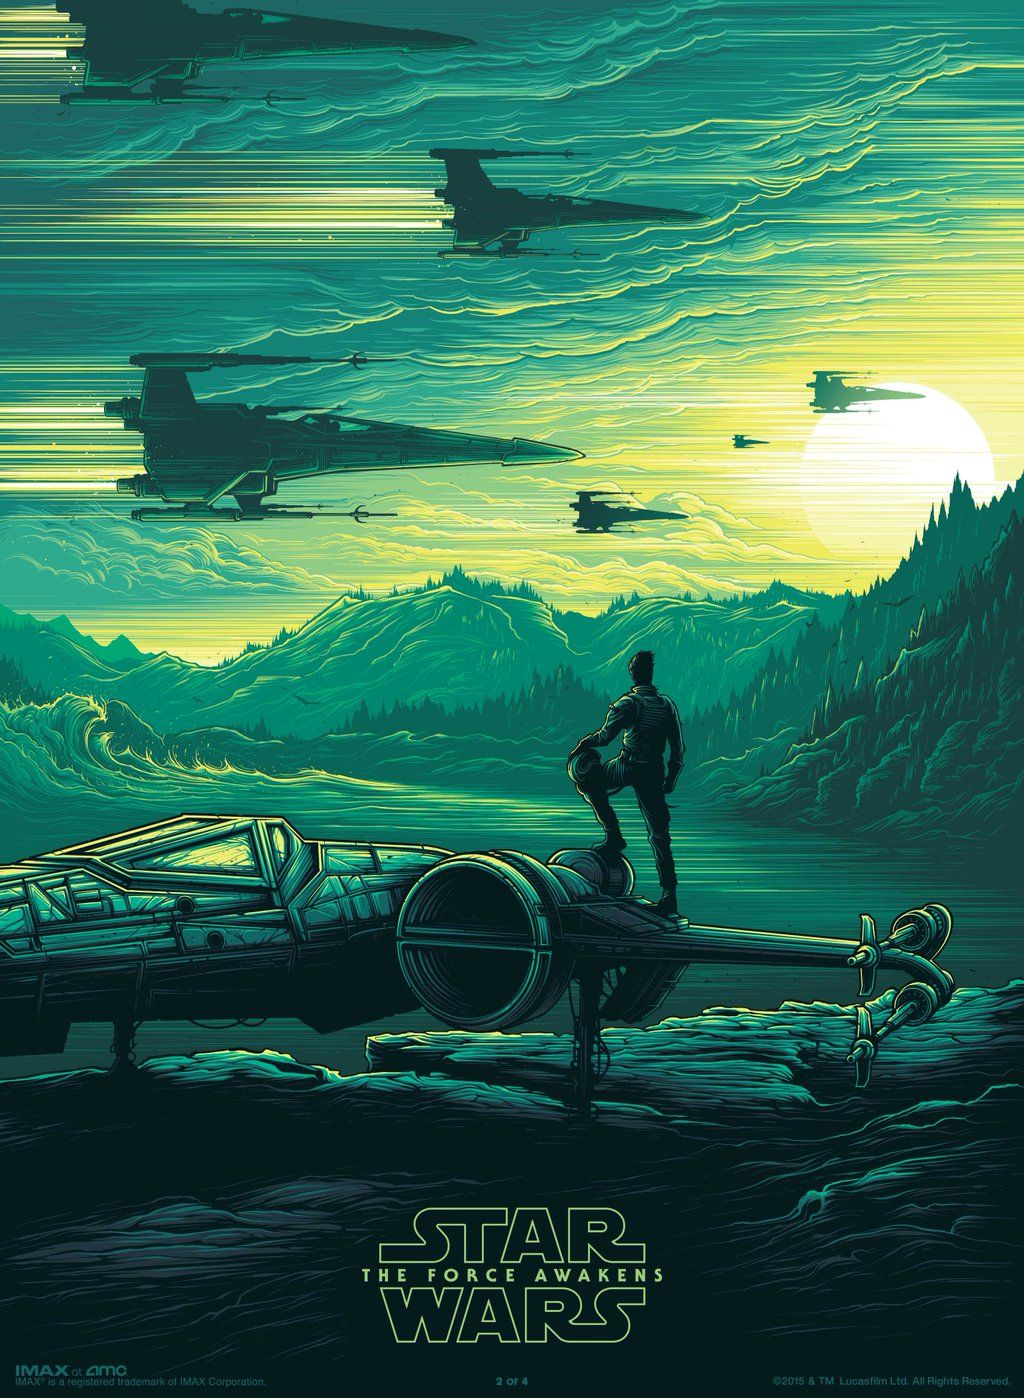 Star Wars: The Force Awakens Poe Dameron IMAX Poster